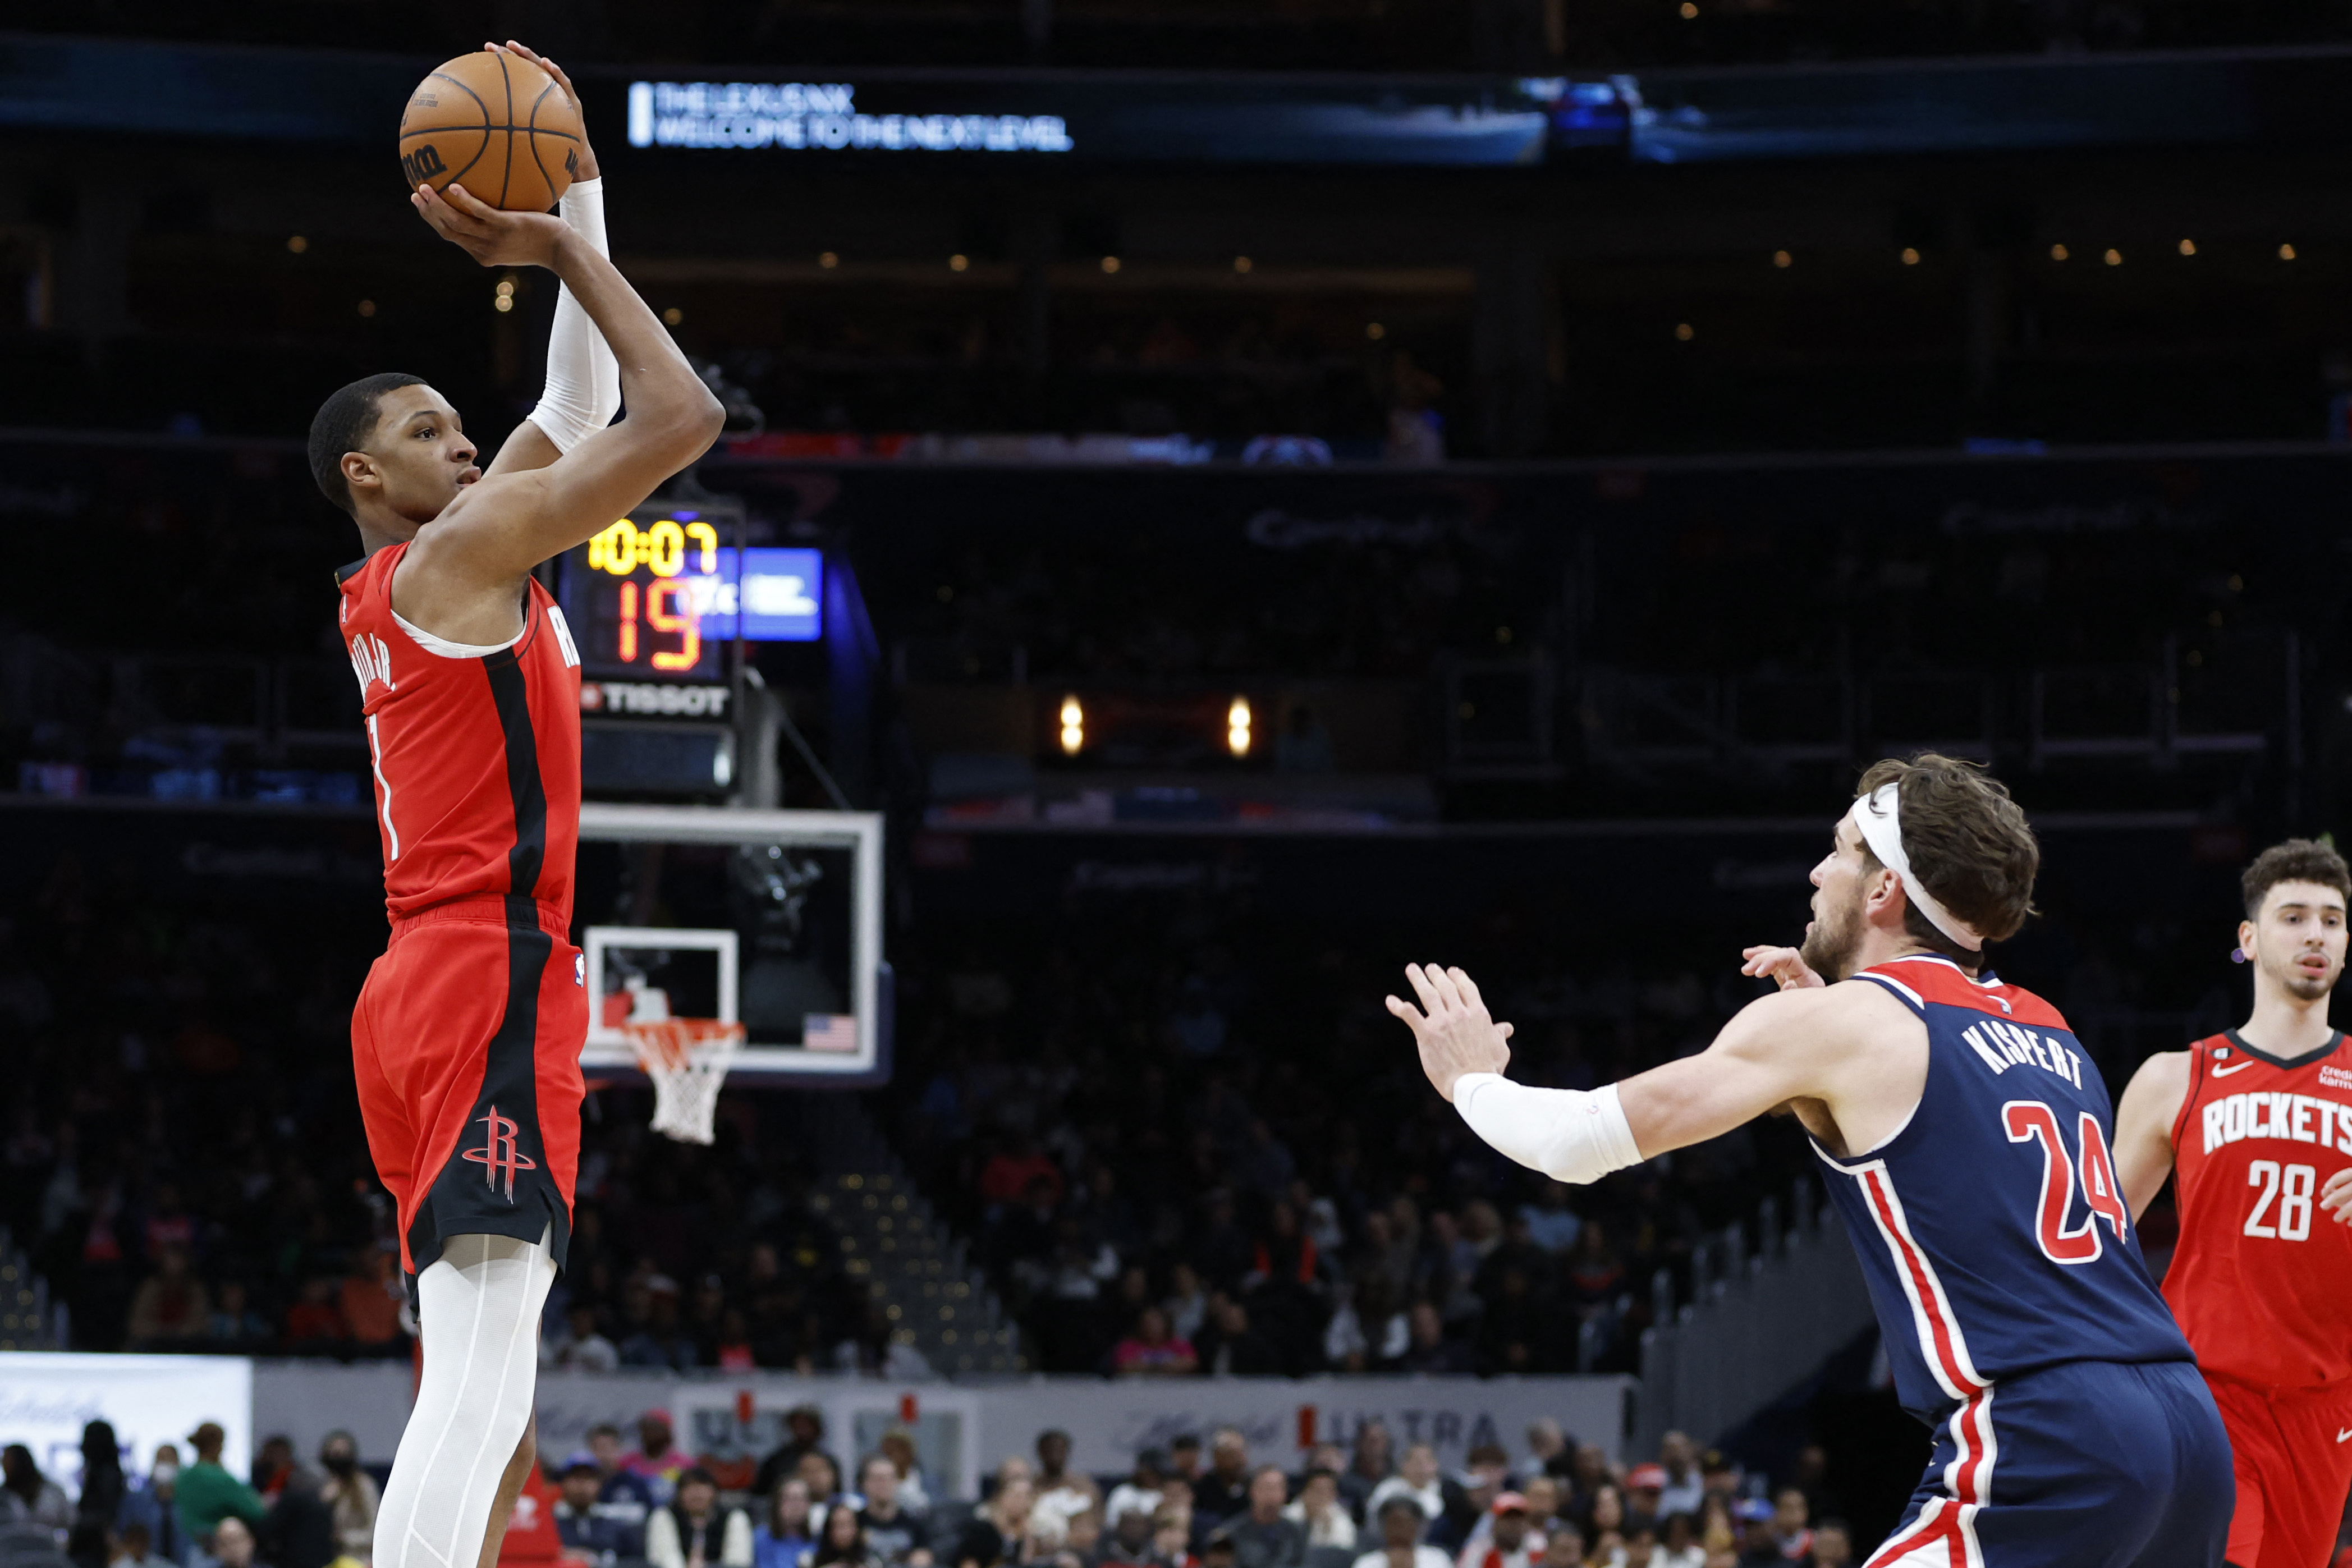 Rockets Forward Jabari Smith Jr. Already Settling in to NBA - NBA